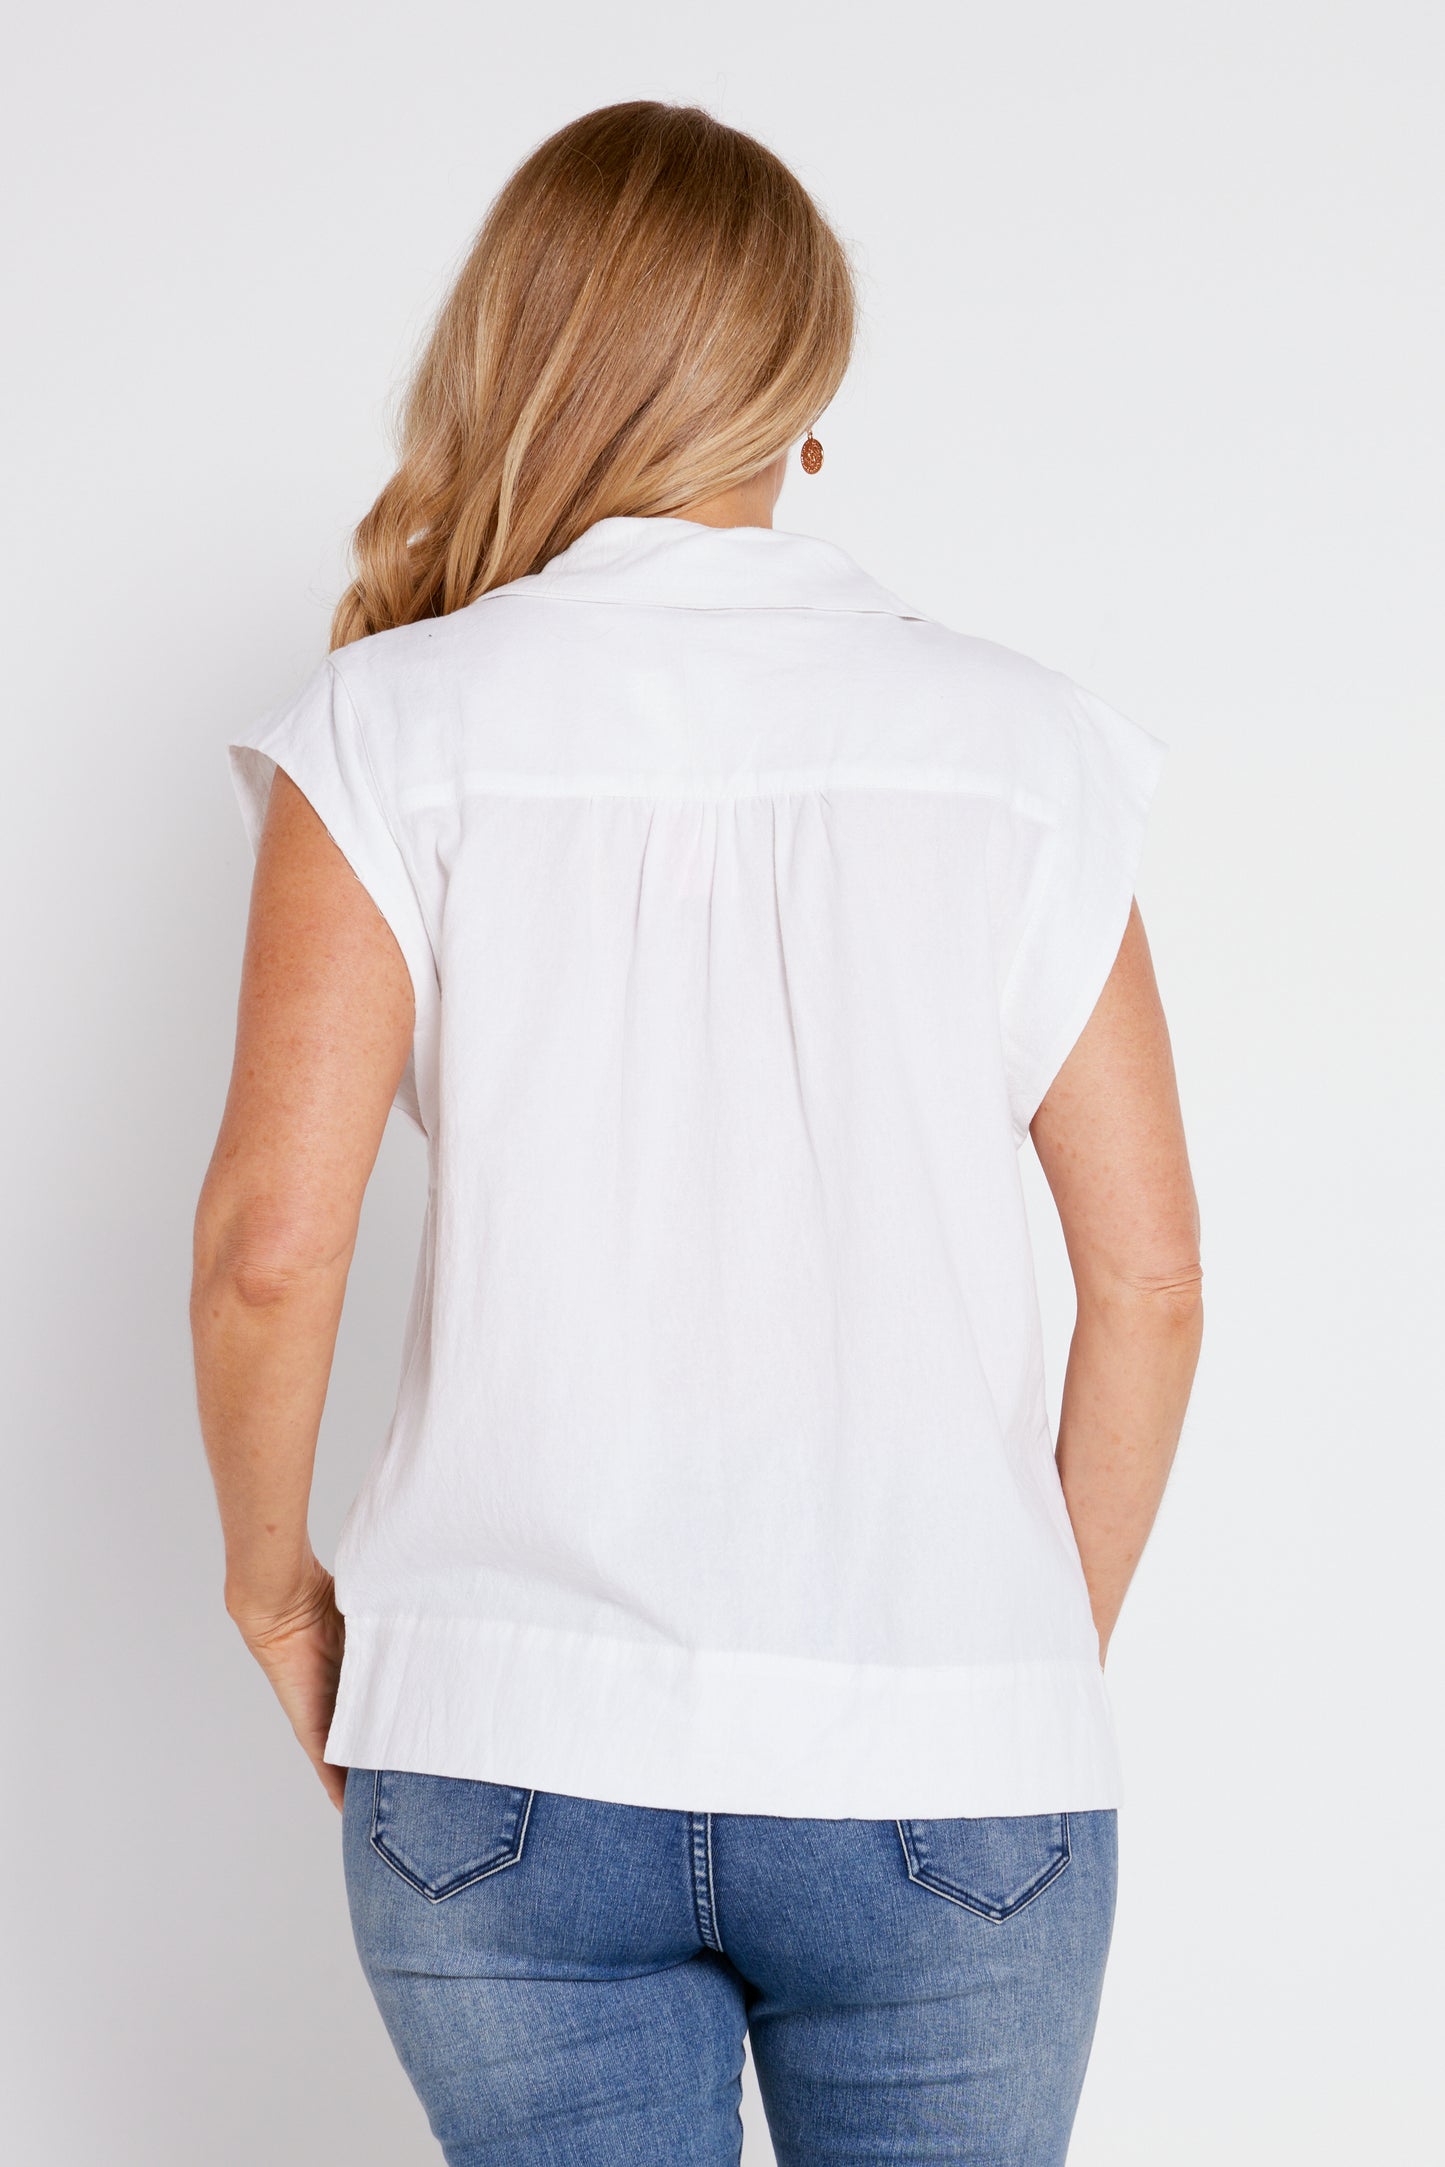 Fallon Upcycled Core Shirt - White